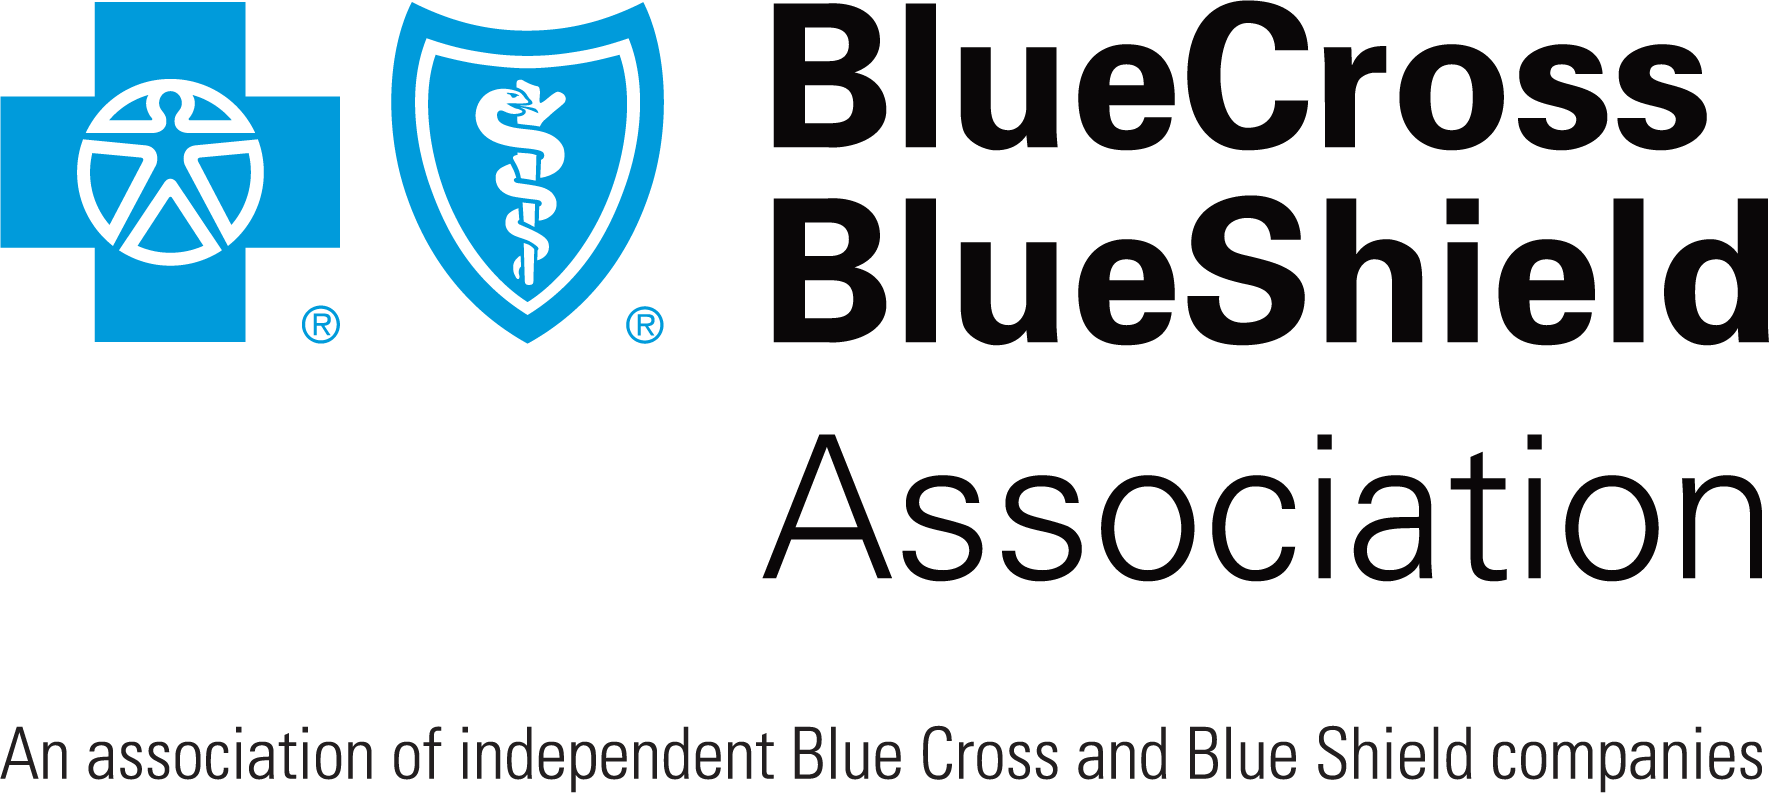 Blue Cross Blue Shield Association logo